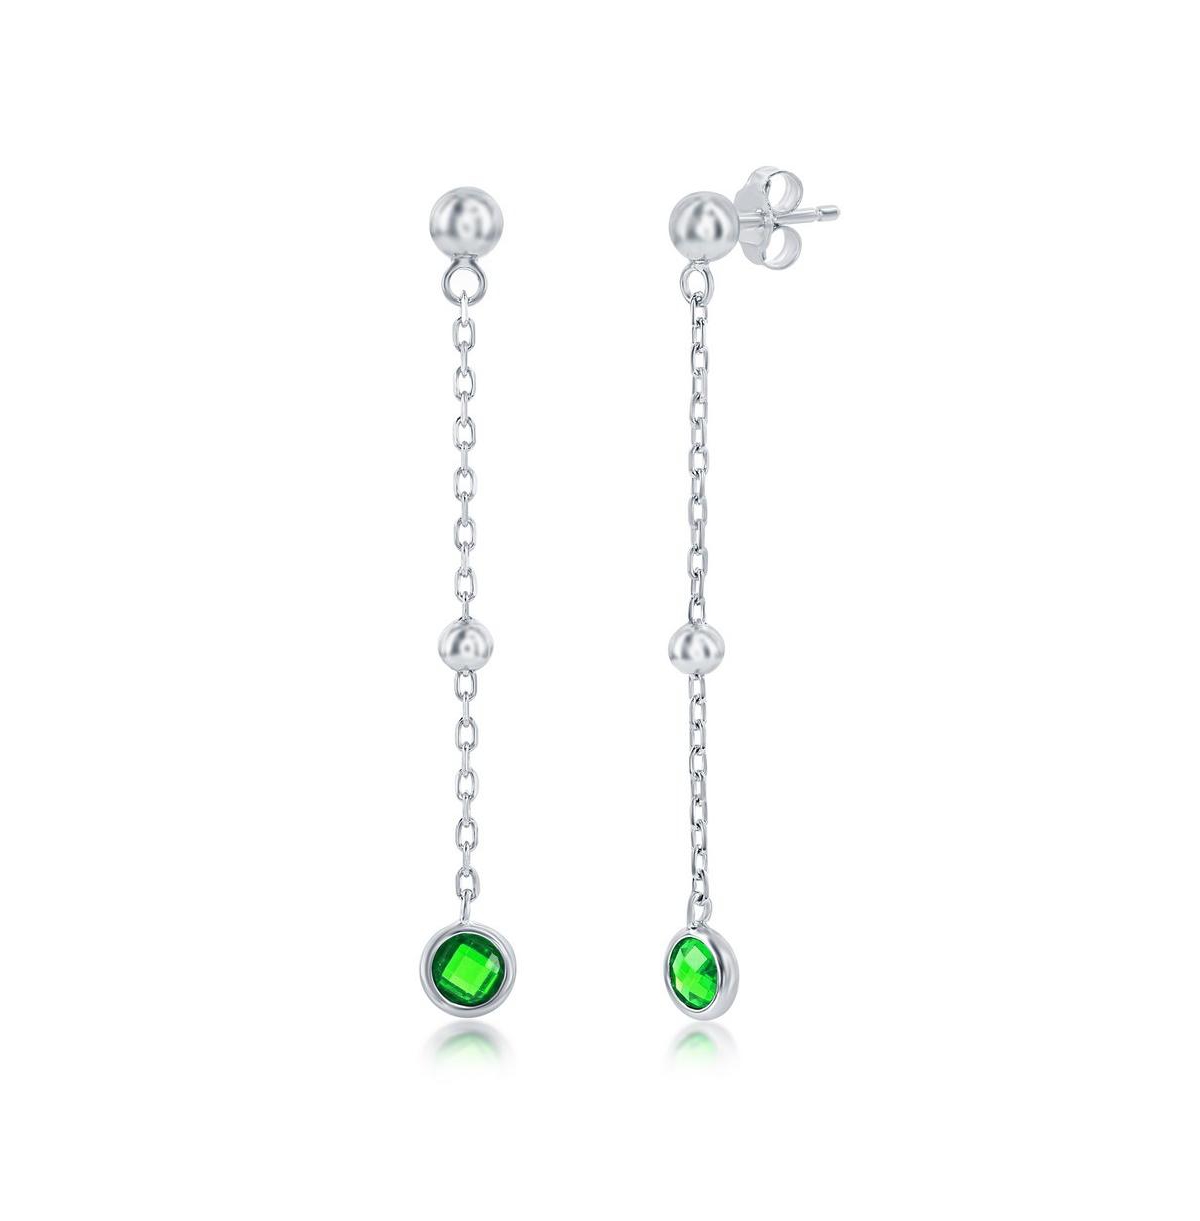 Sterling Silver Bezel-Set Cz Bead Chain Earrings (White, Green, Blue Or Red) - Ruby